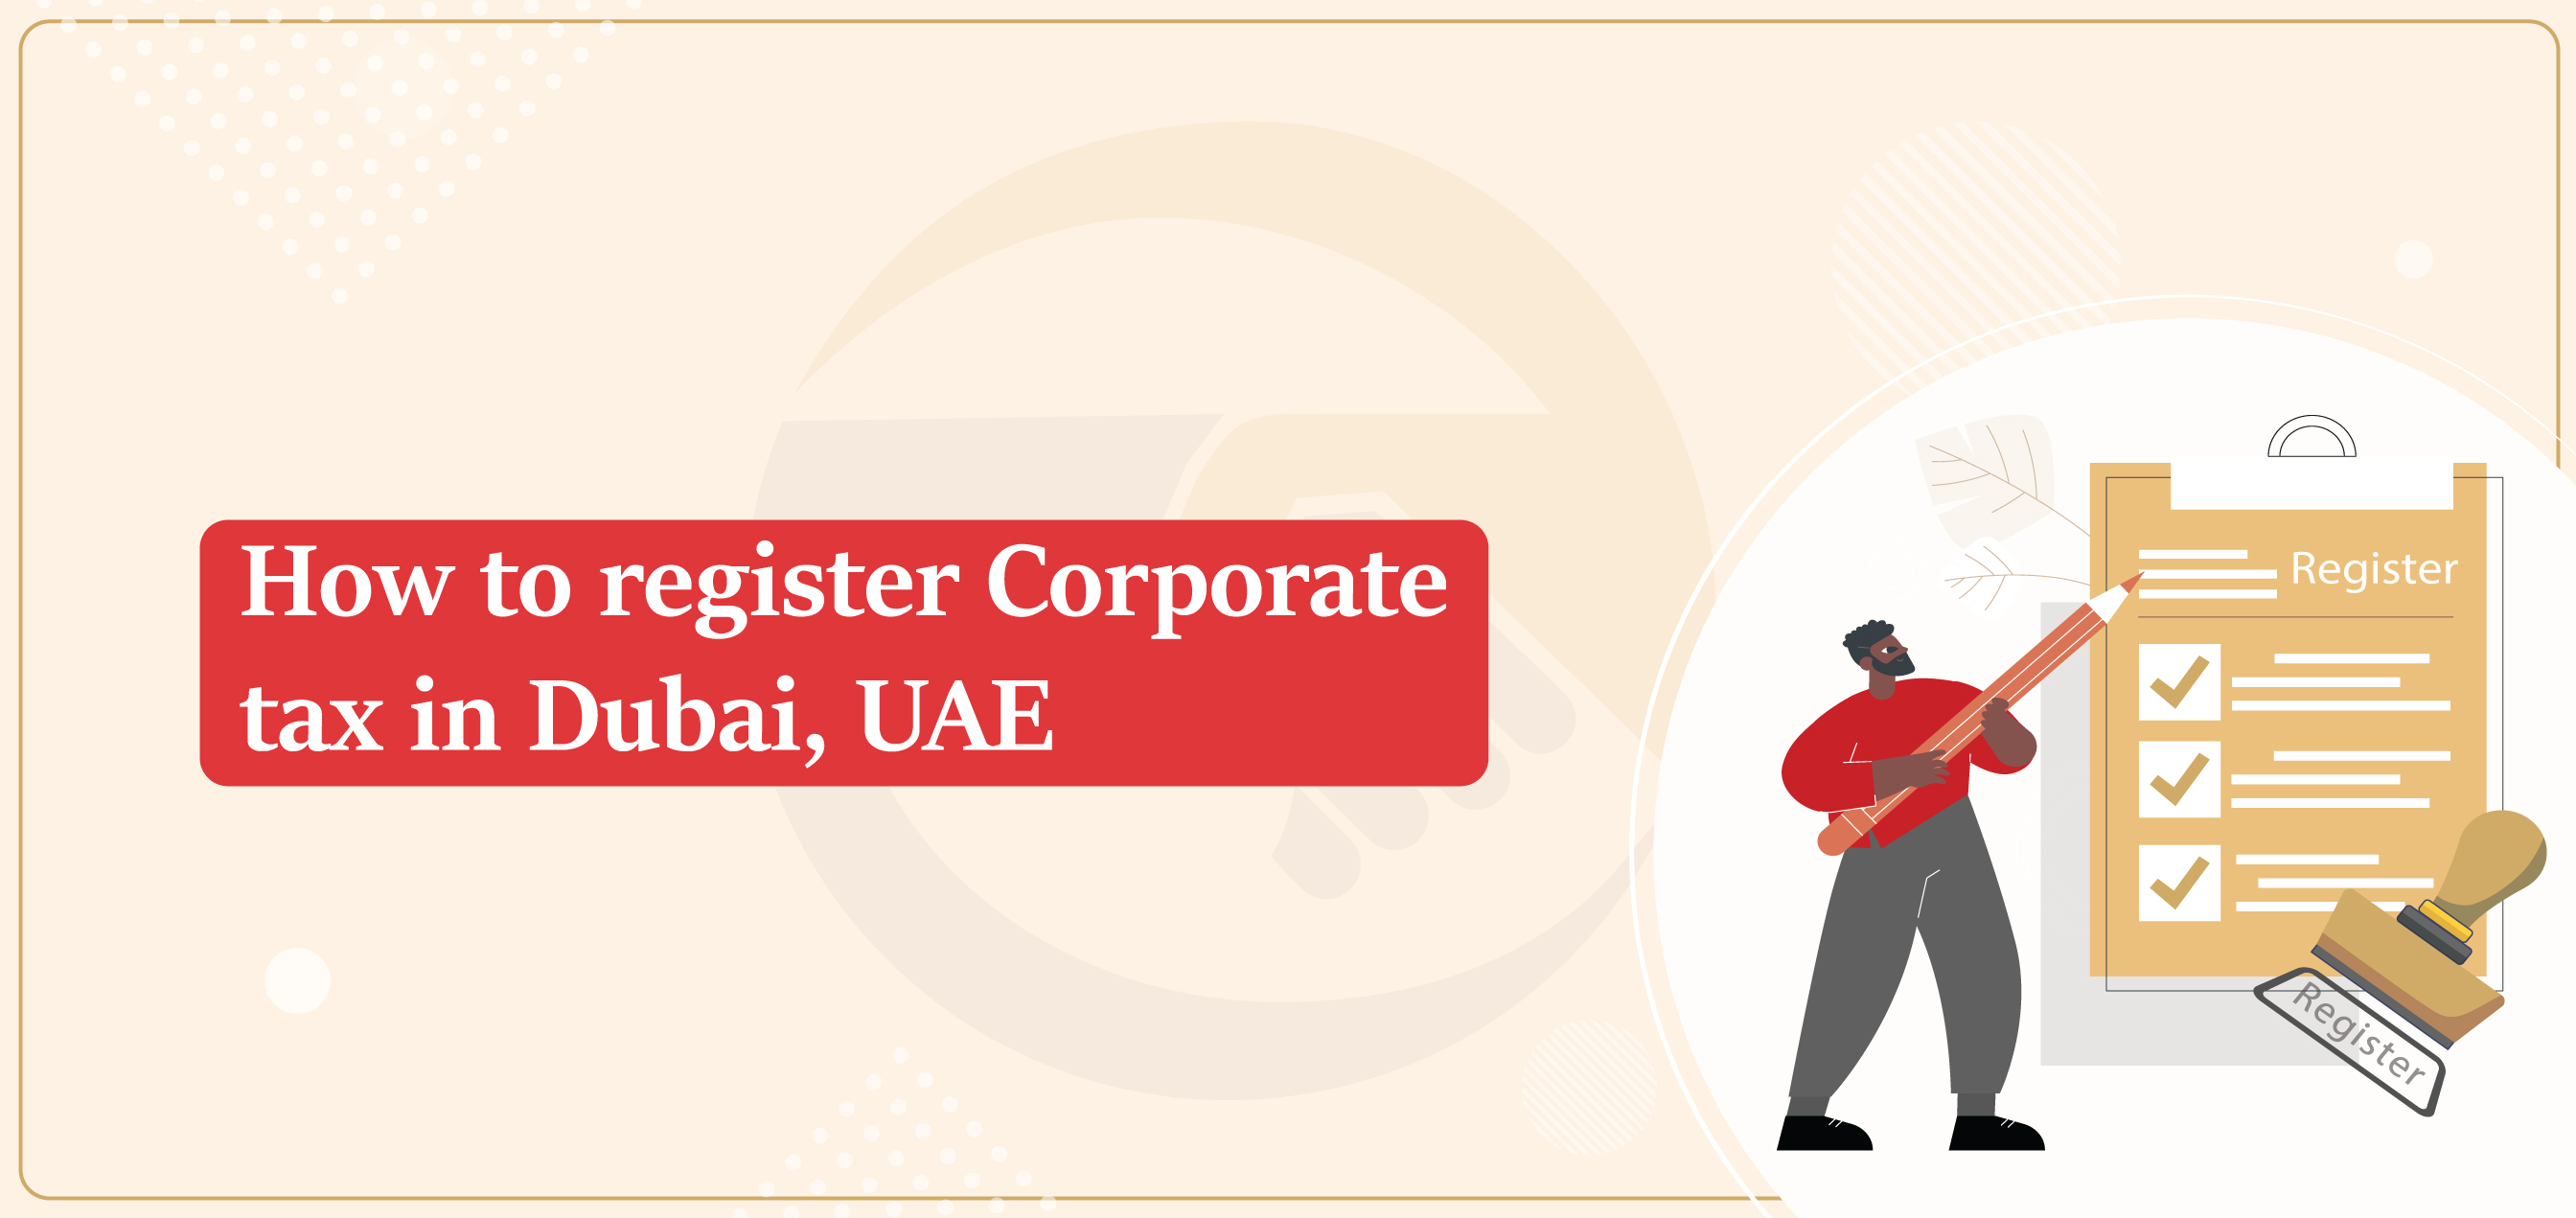 How to register Corporate tax in Dubai, UAE